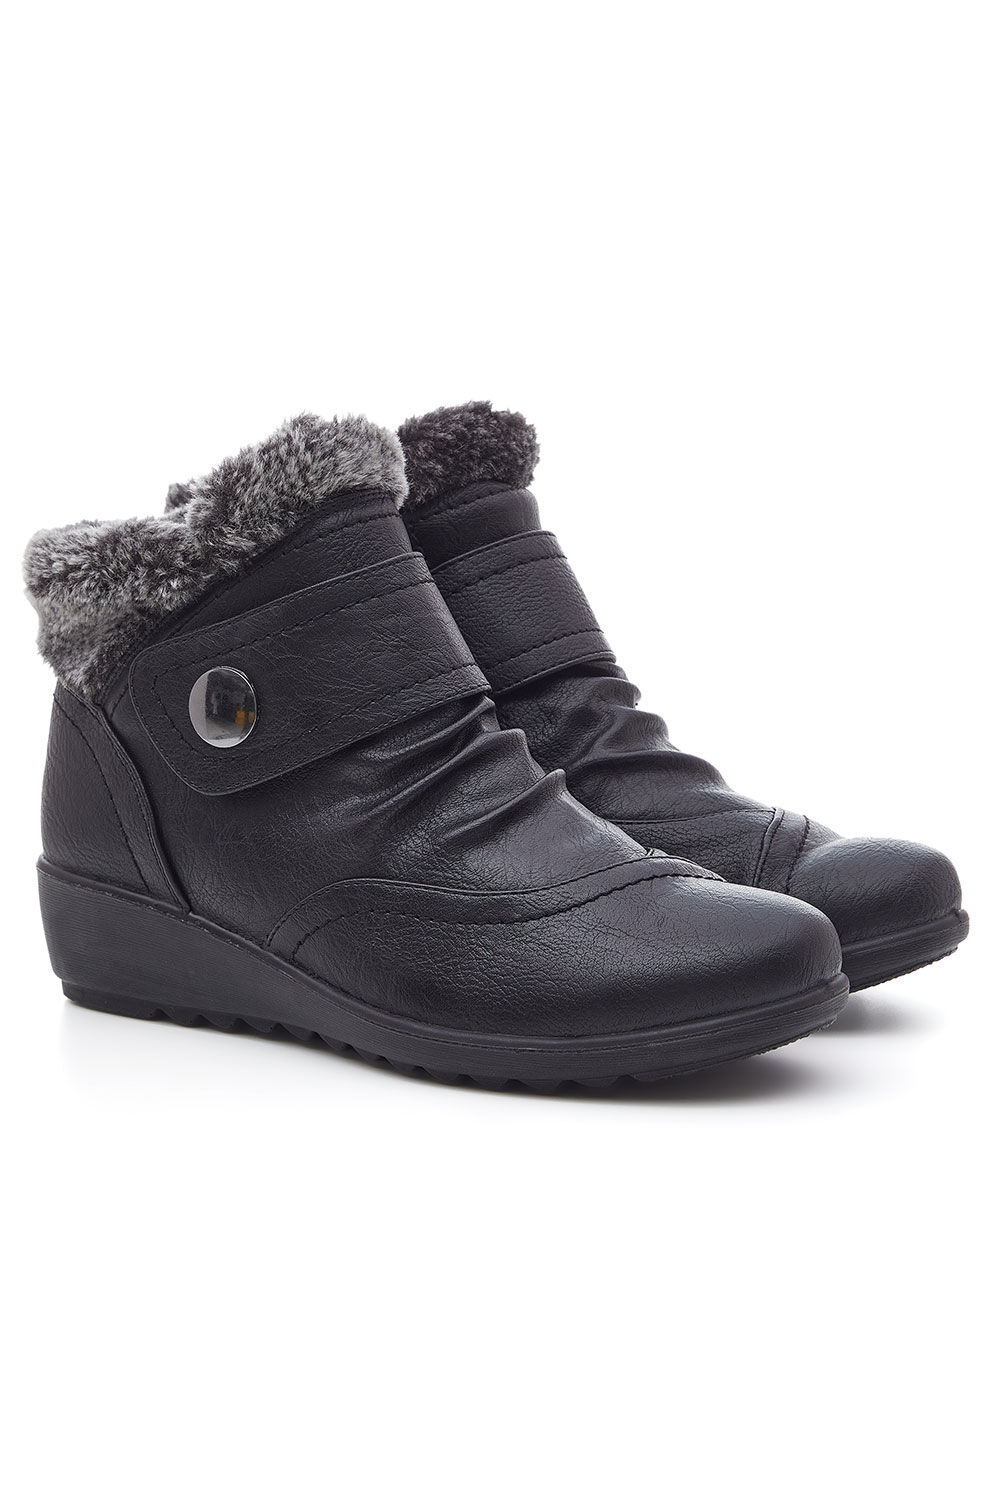 Cushion Walk Black - Fur Trim Ankle Boots With Stud Strap, Size: 3